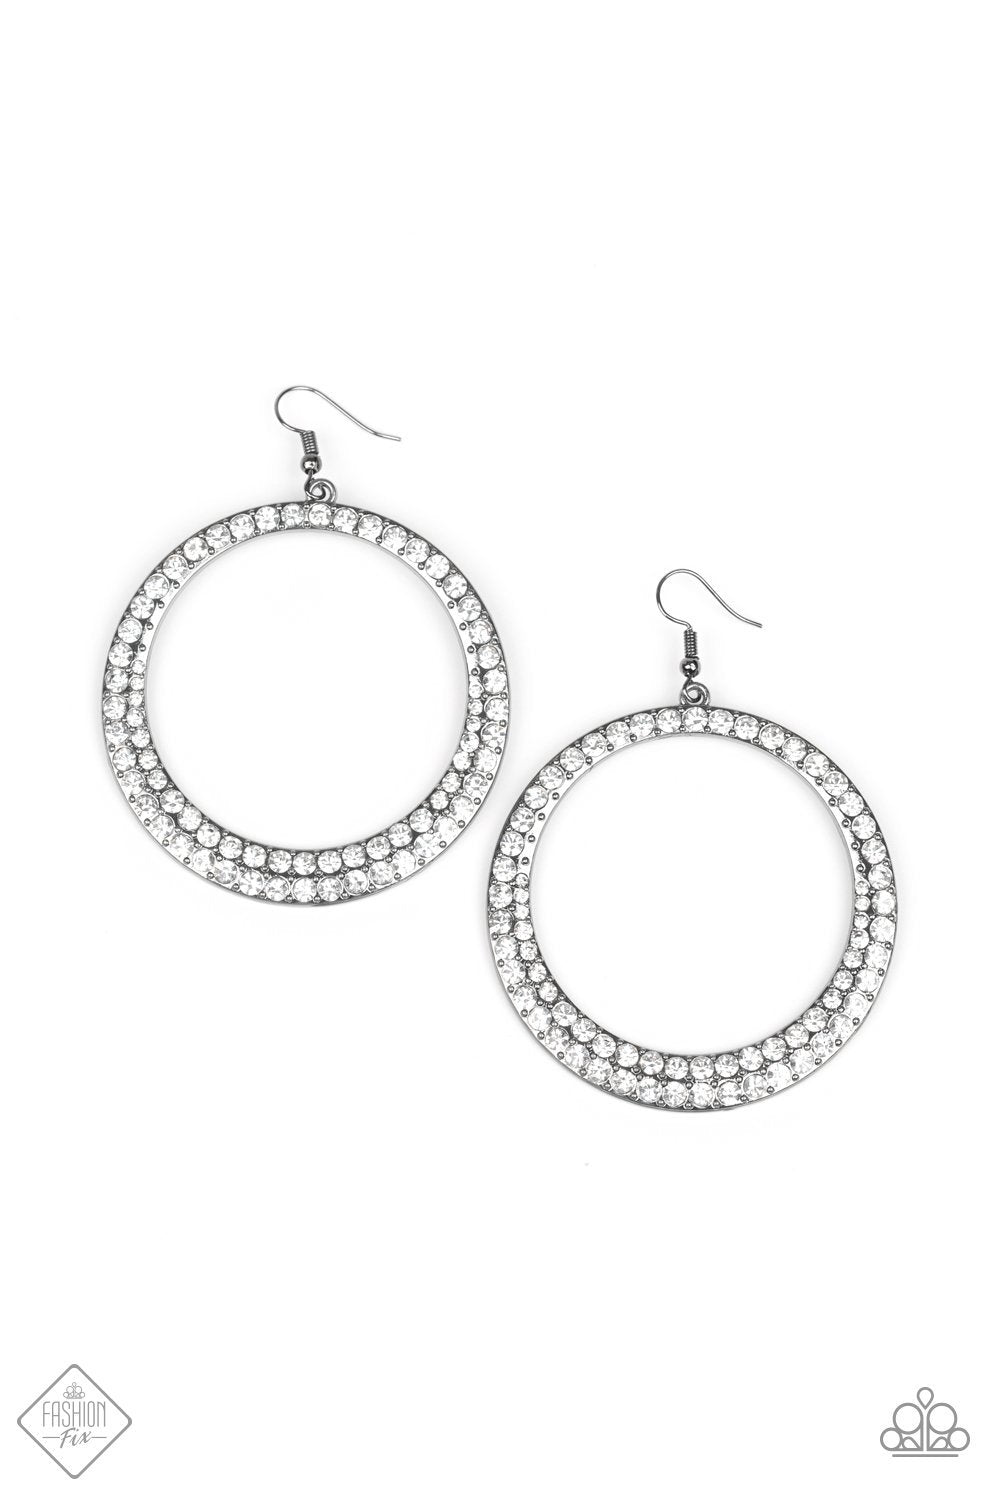 So Demanding Black Gunmetal and White Rhinestone Hoop Earrings - Paparazzi Accessories-CarasShop.com - $5 Jewelry by Cara Jewels